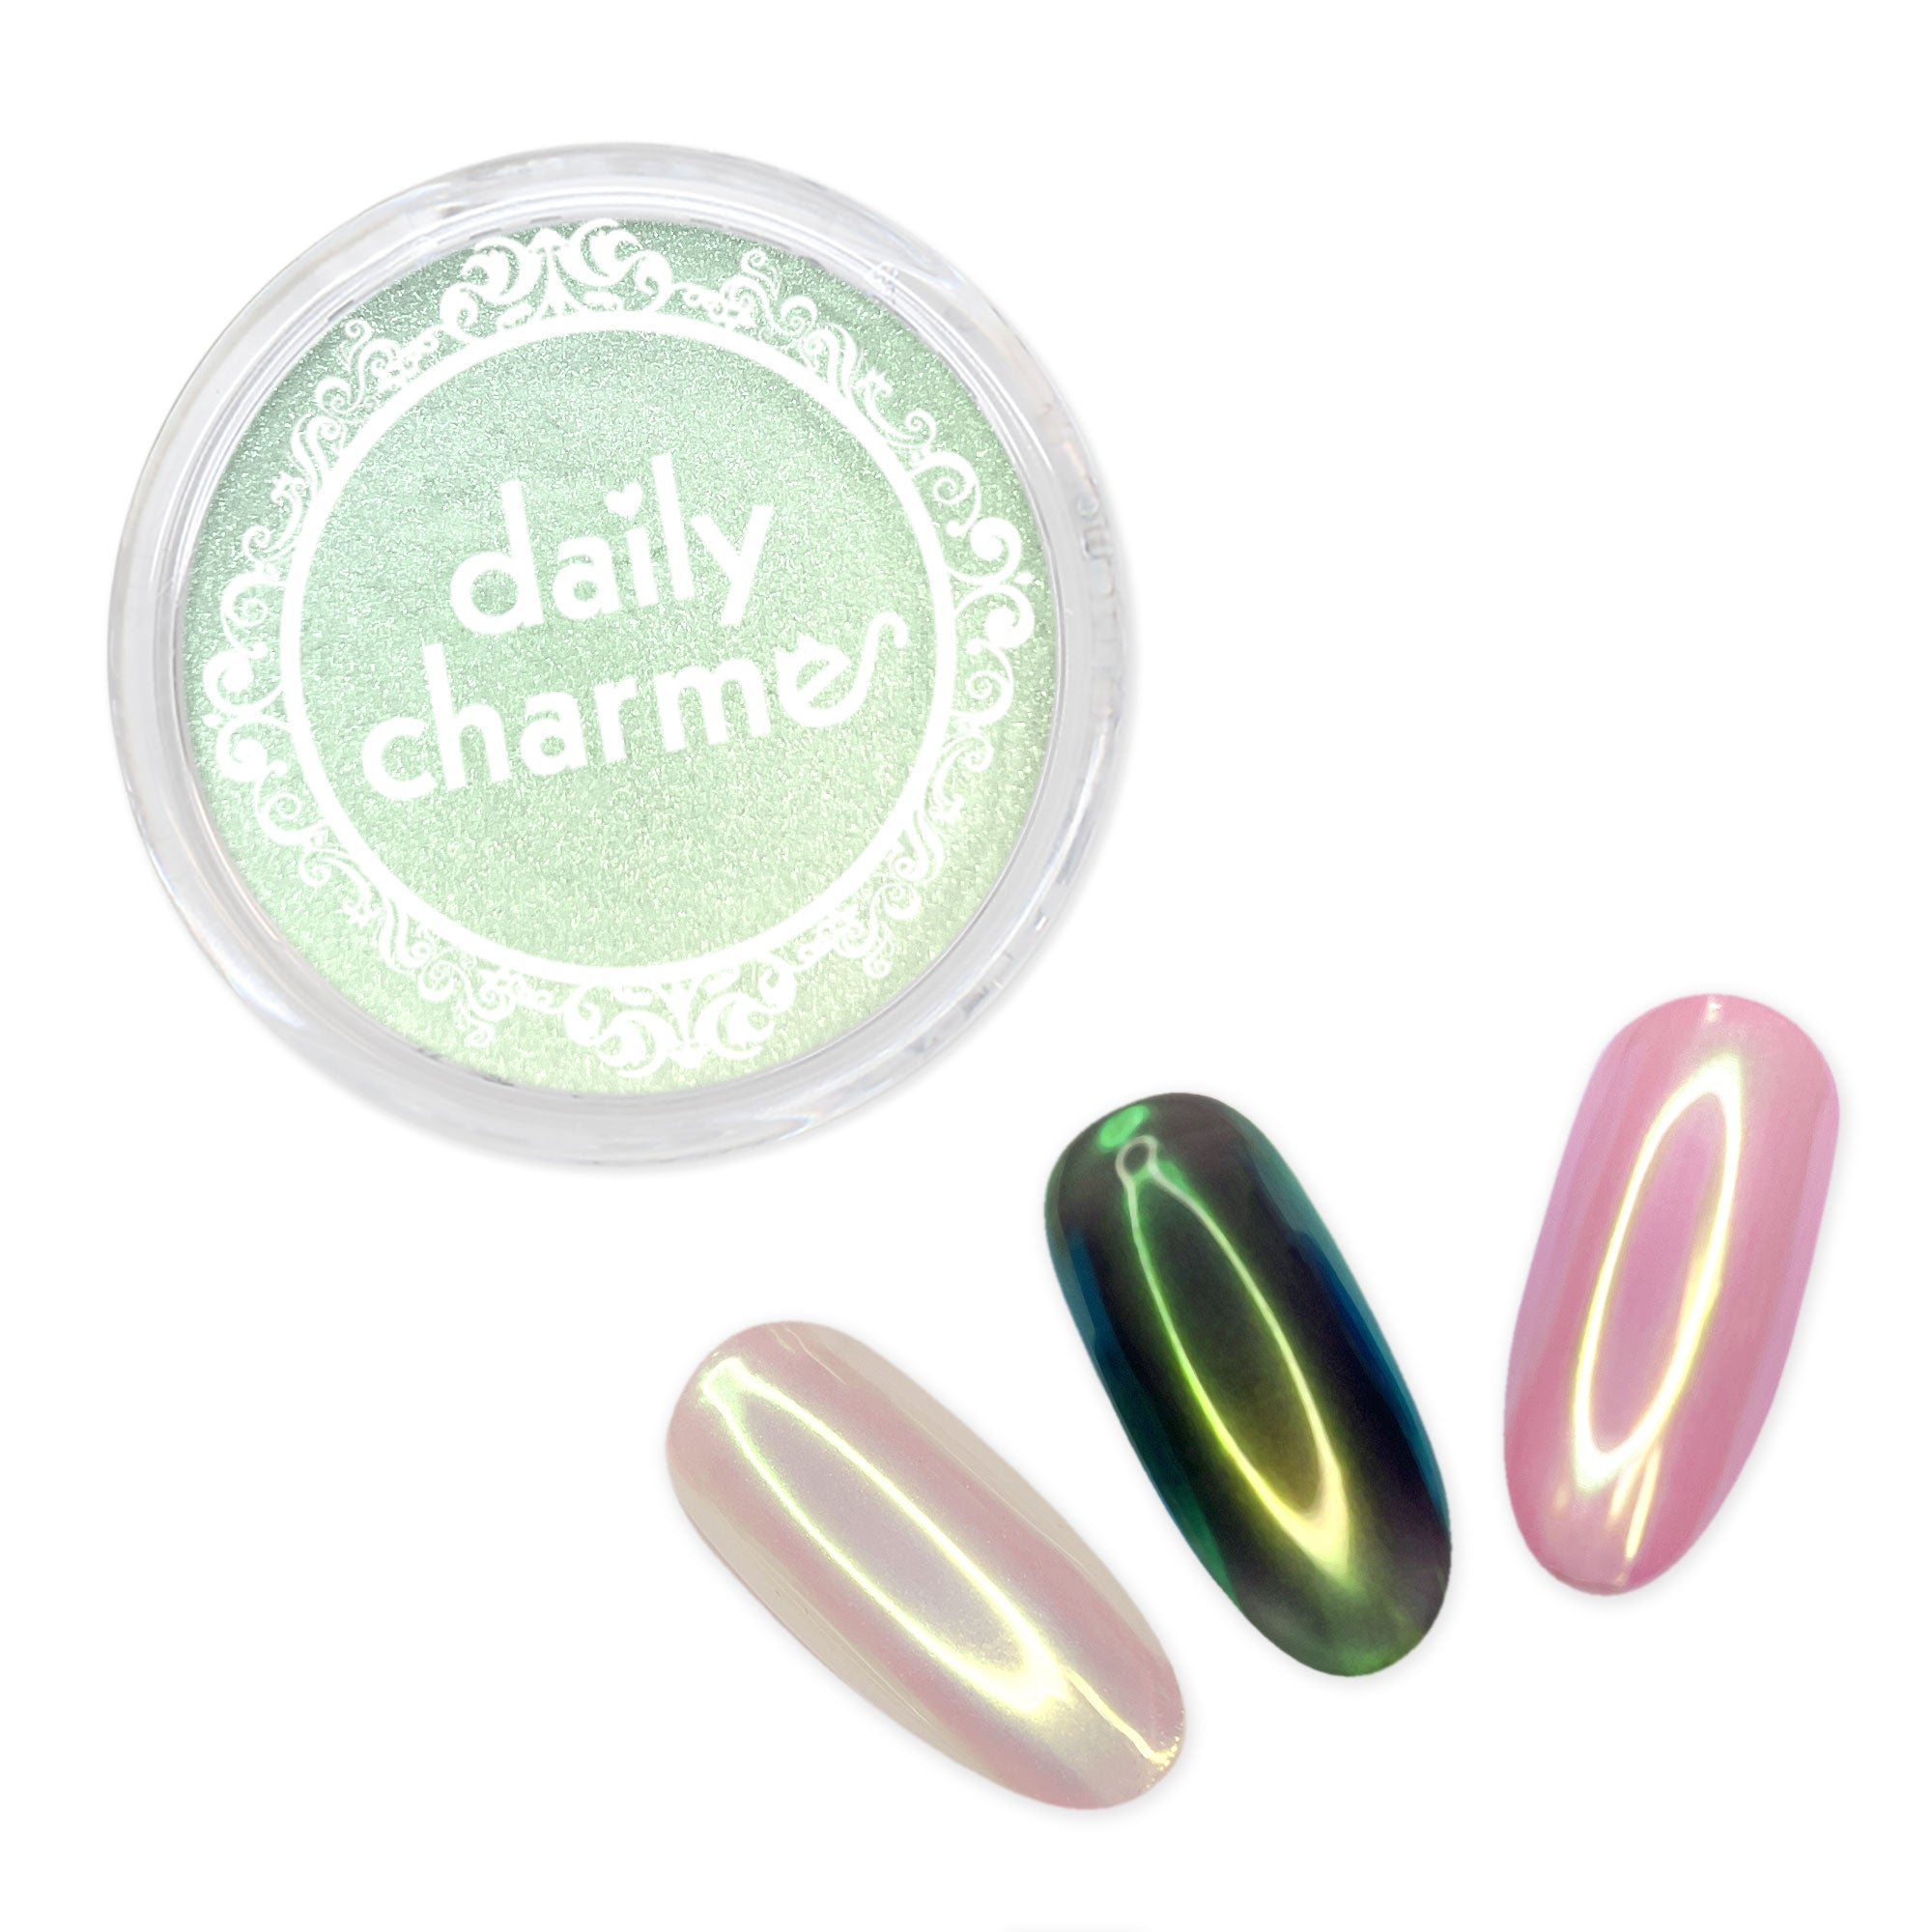 Daily Charme Stardust Chrome Powder / Emerald Green Iridescent Shifting